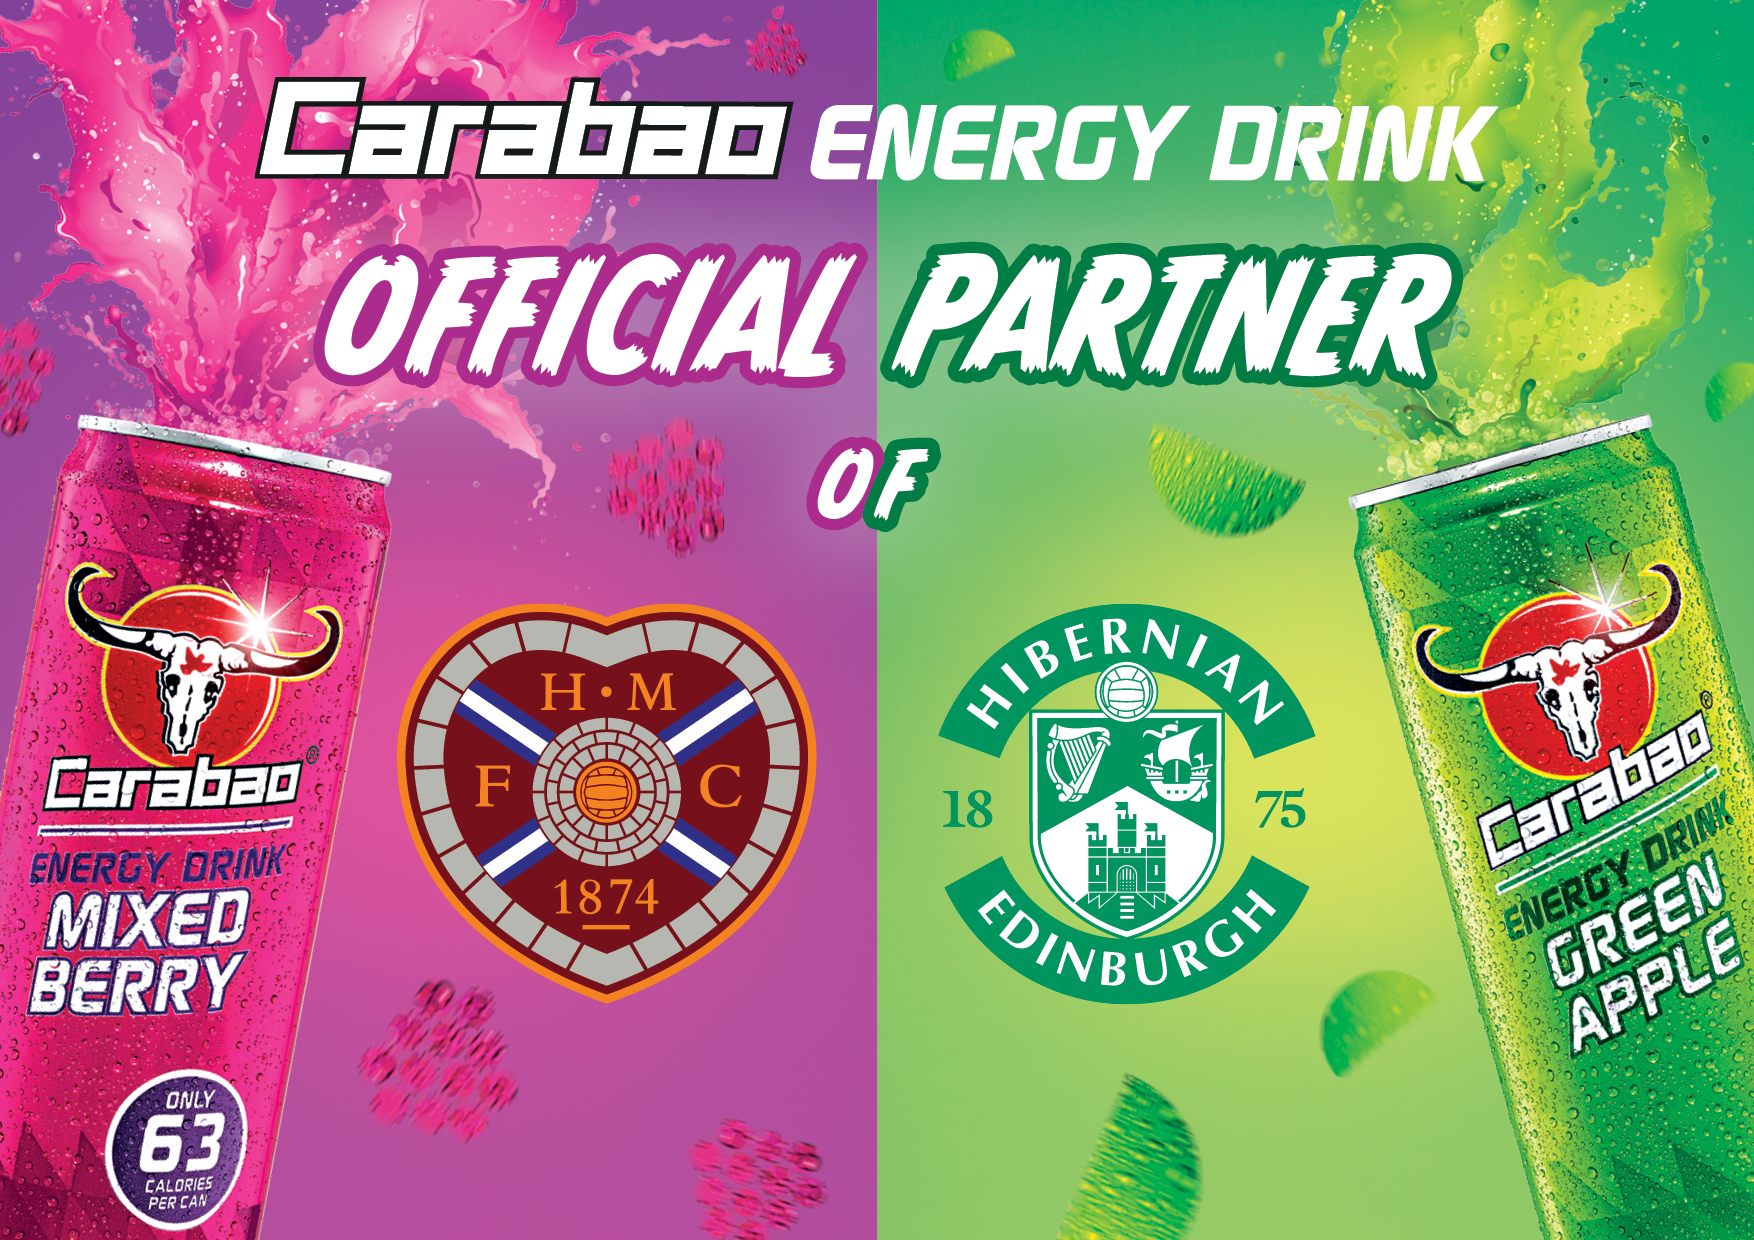 Carabao announces second year sponsorship of Edinburgh soccer rivals